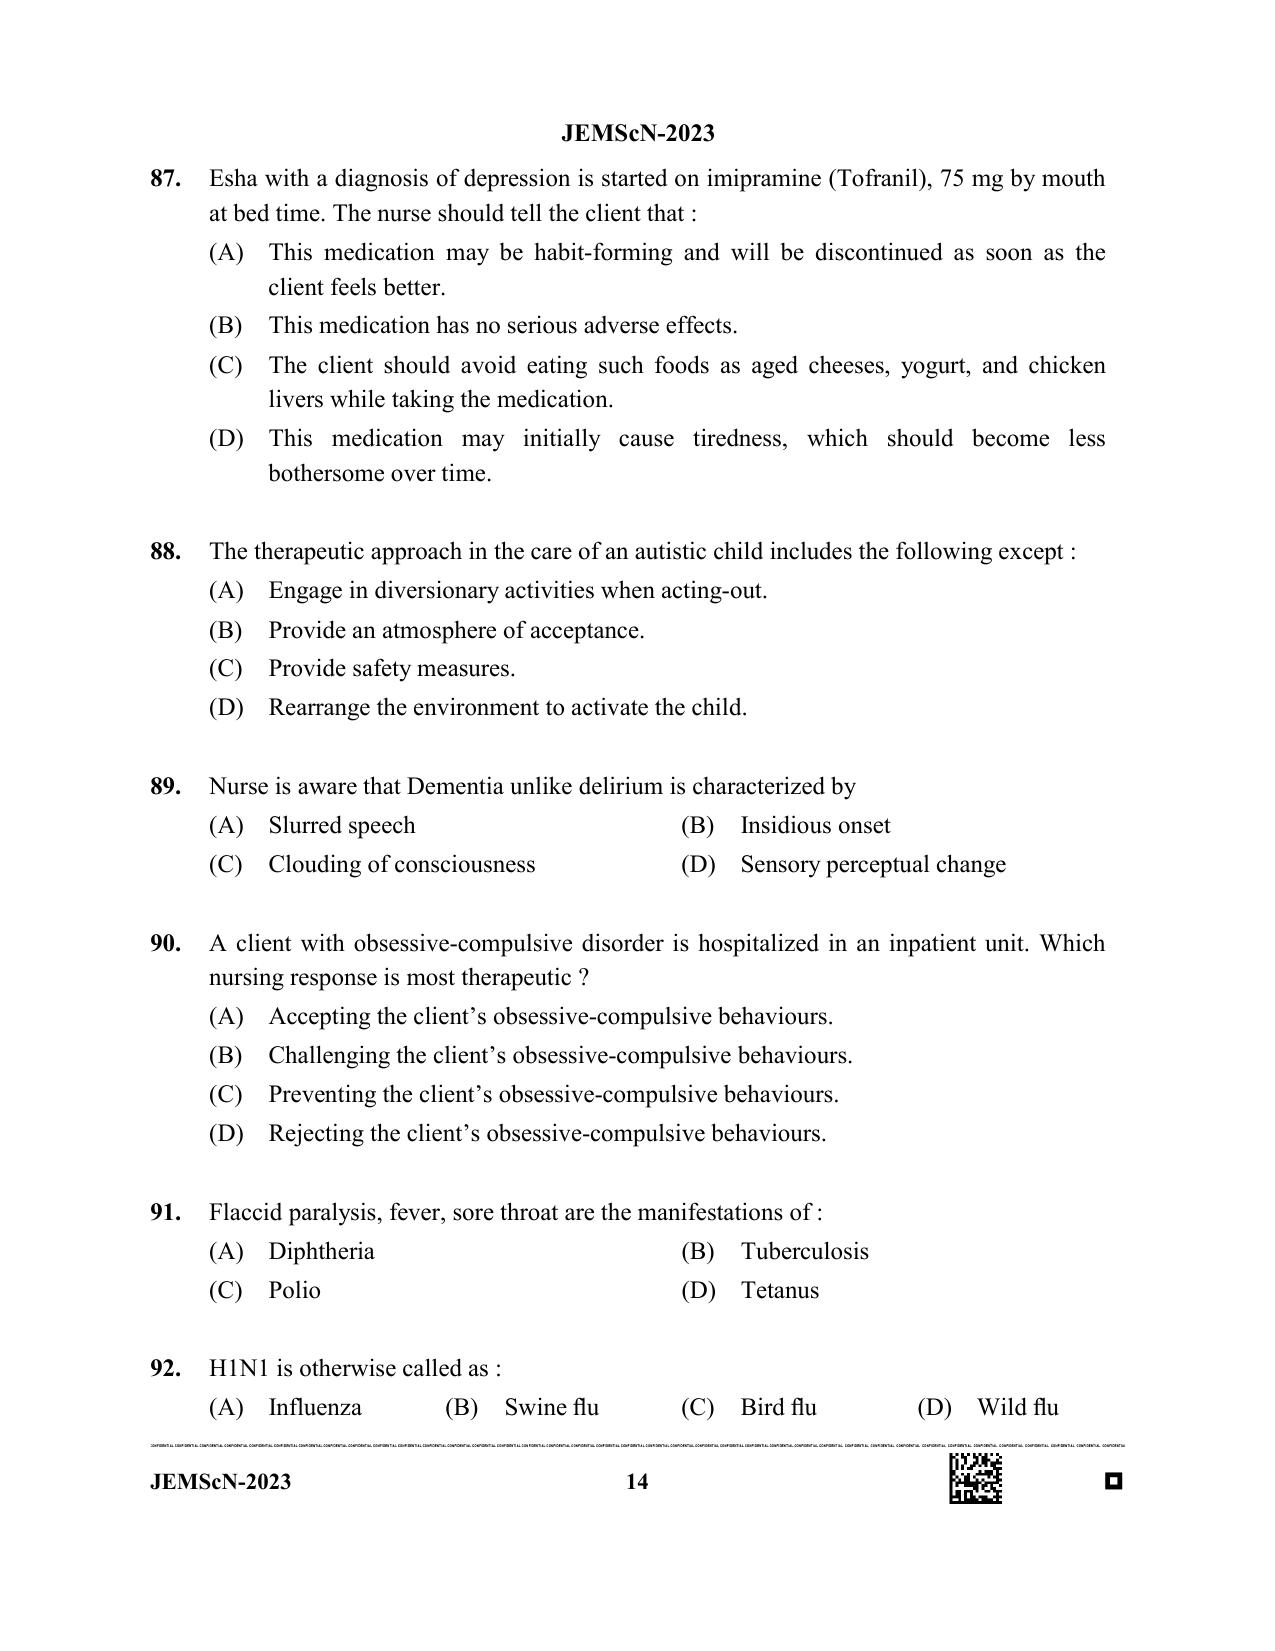 WB JEMScN 2023 Question Paper - Page 14